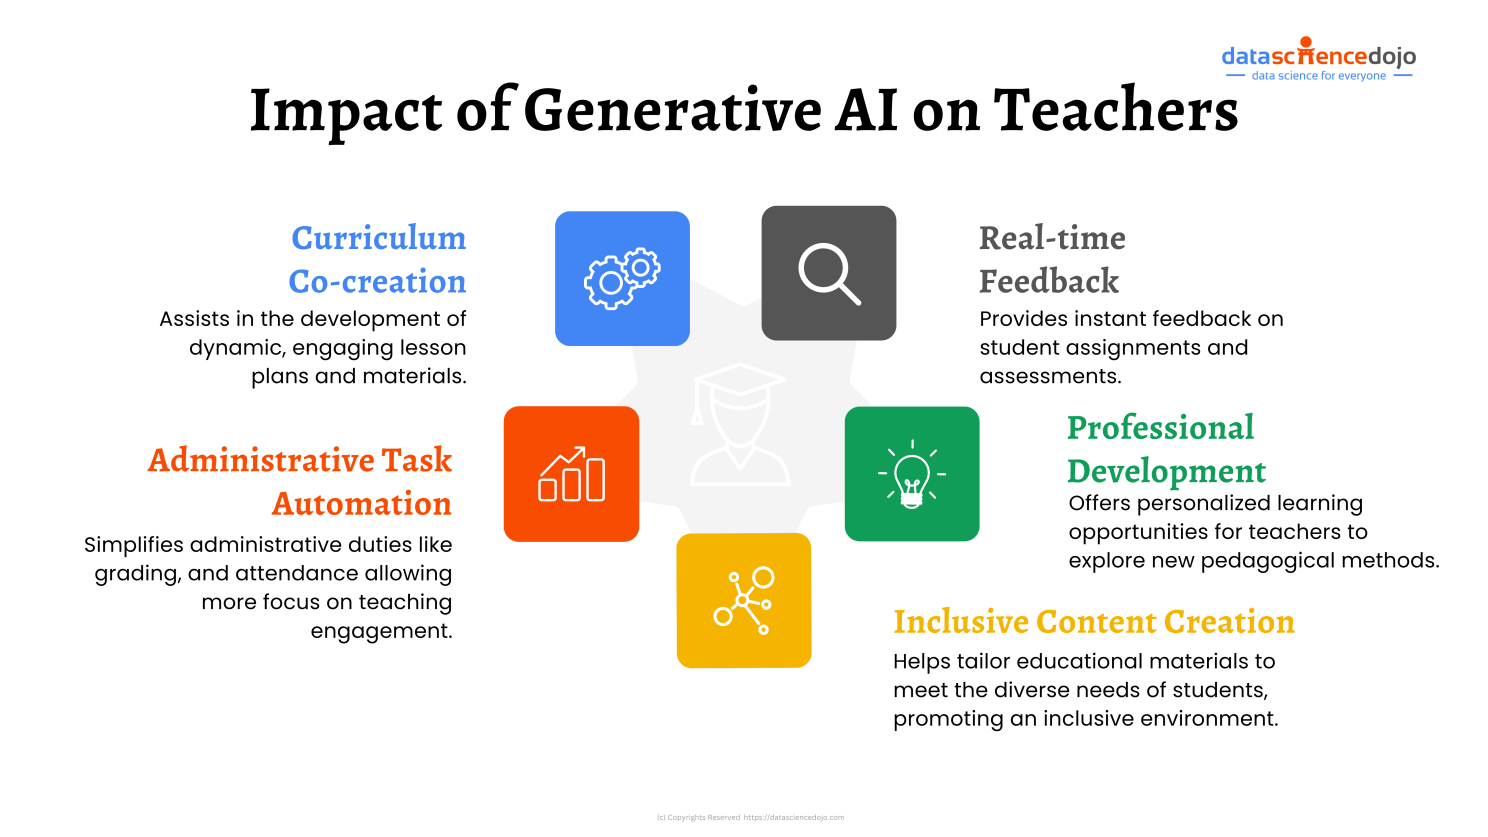 Impact of generative AI on teachers